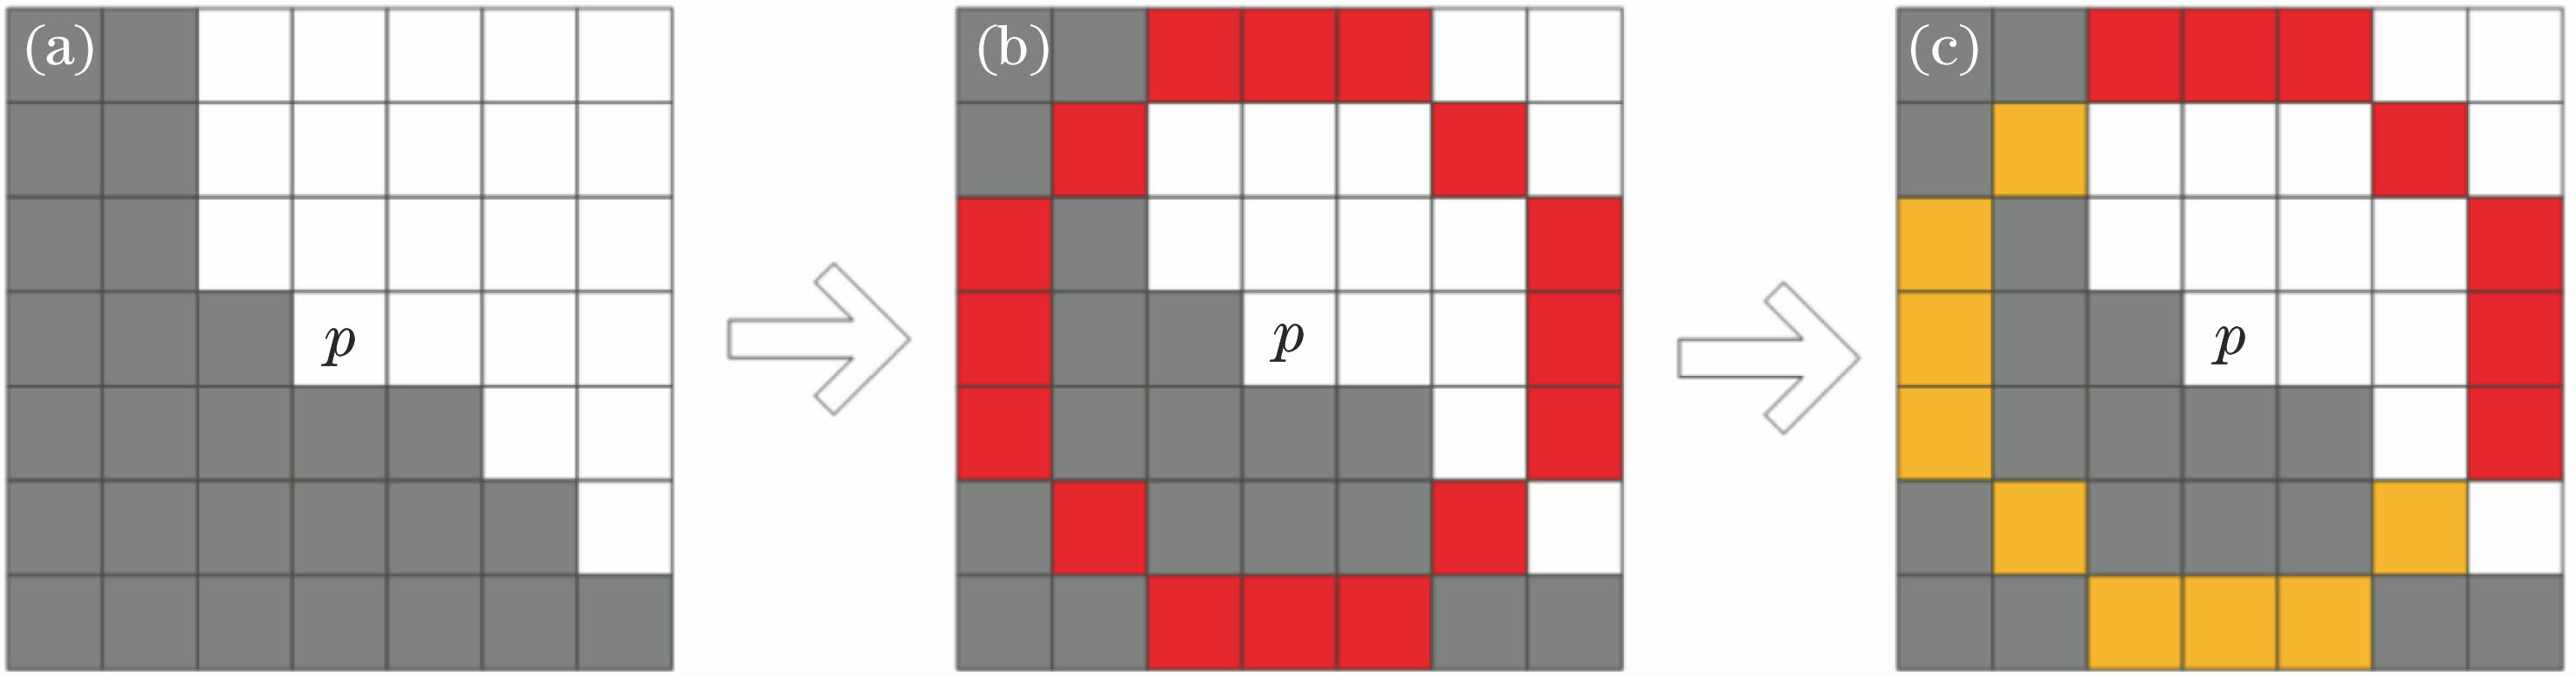 Skewed edge pseudo corner. (a) Edge; (b) decision circle of p; (c) detection result of p